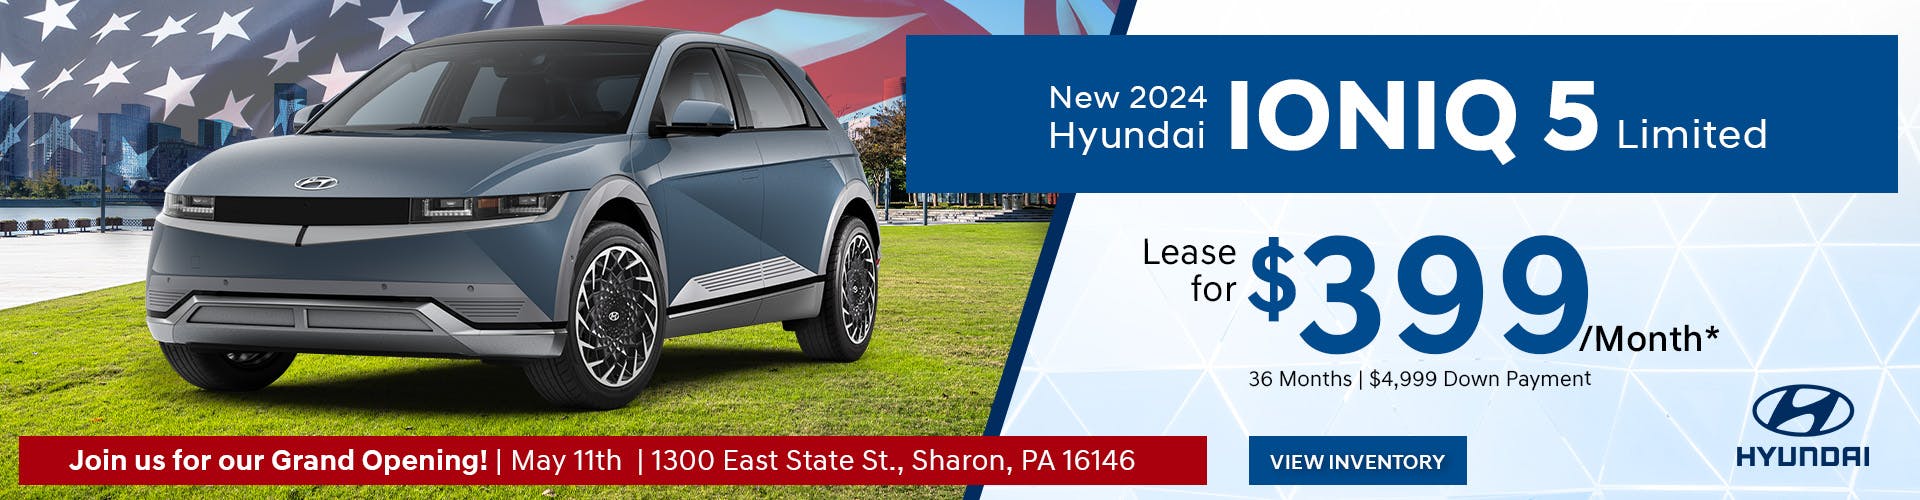 New 2024 Hyundai IONIQ 5 Limited